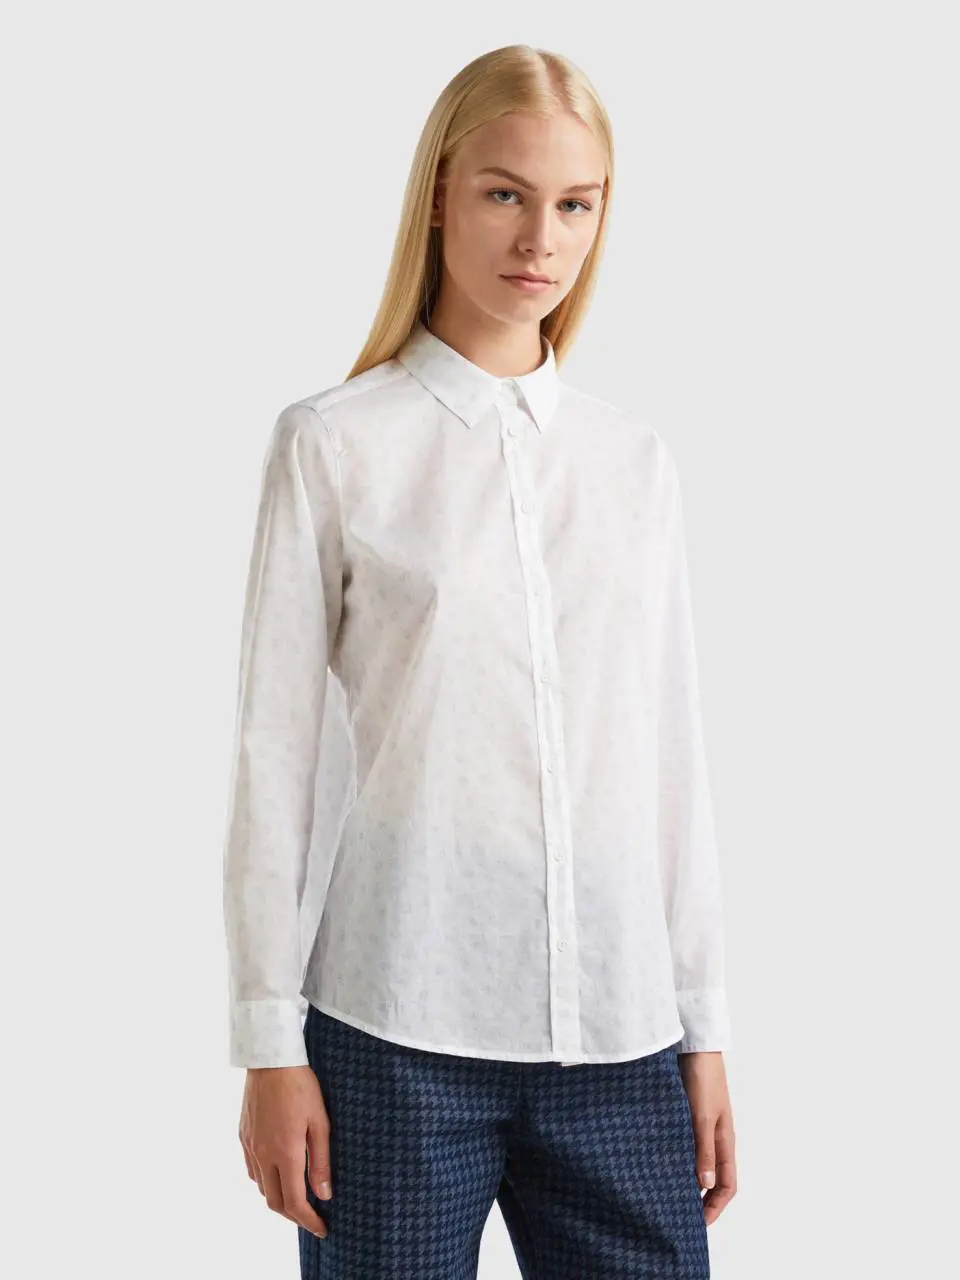 Benetton white floral shirt. 1